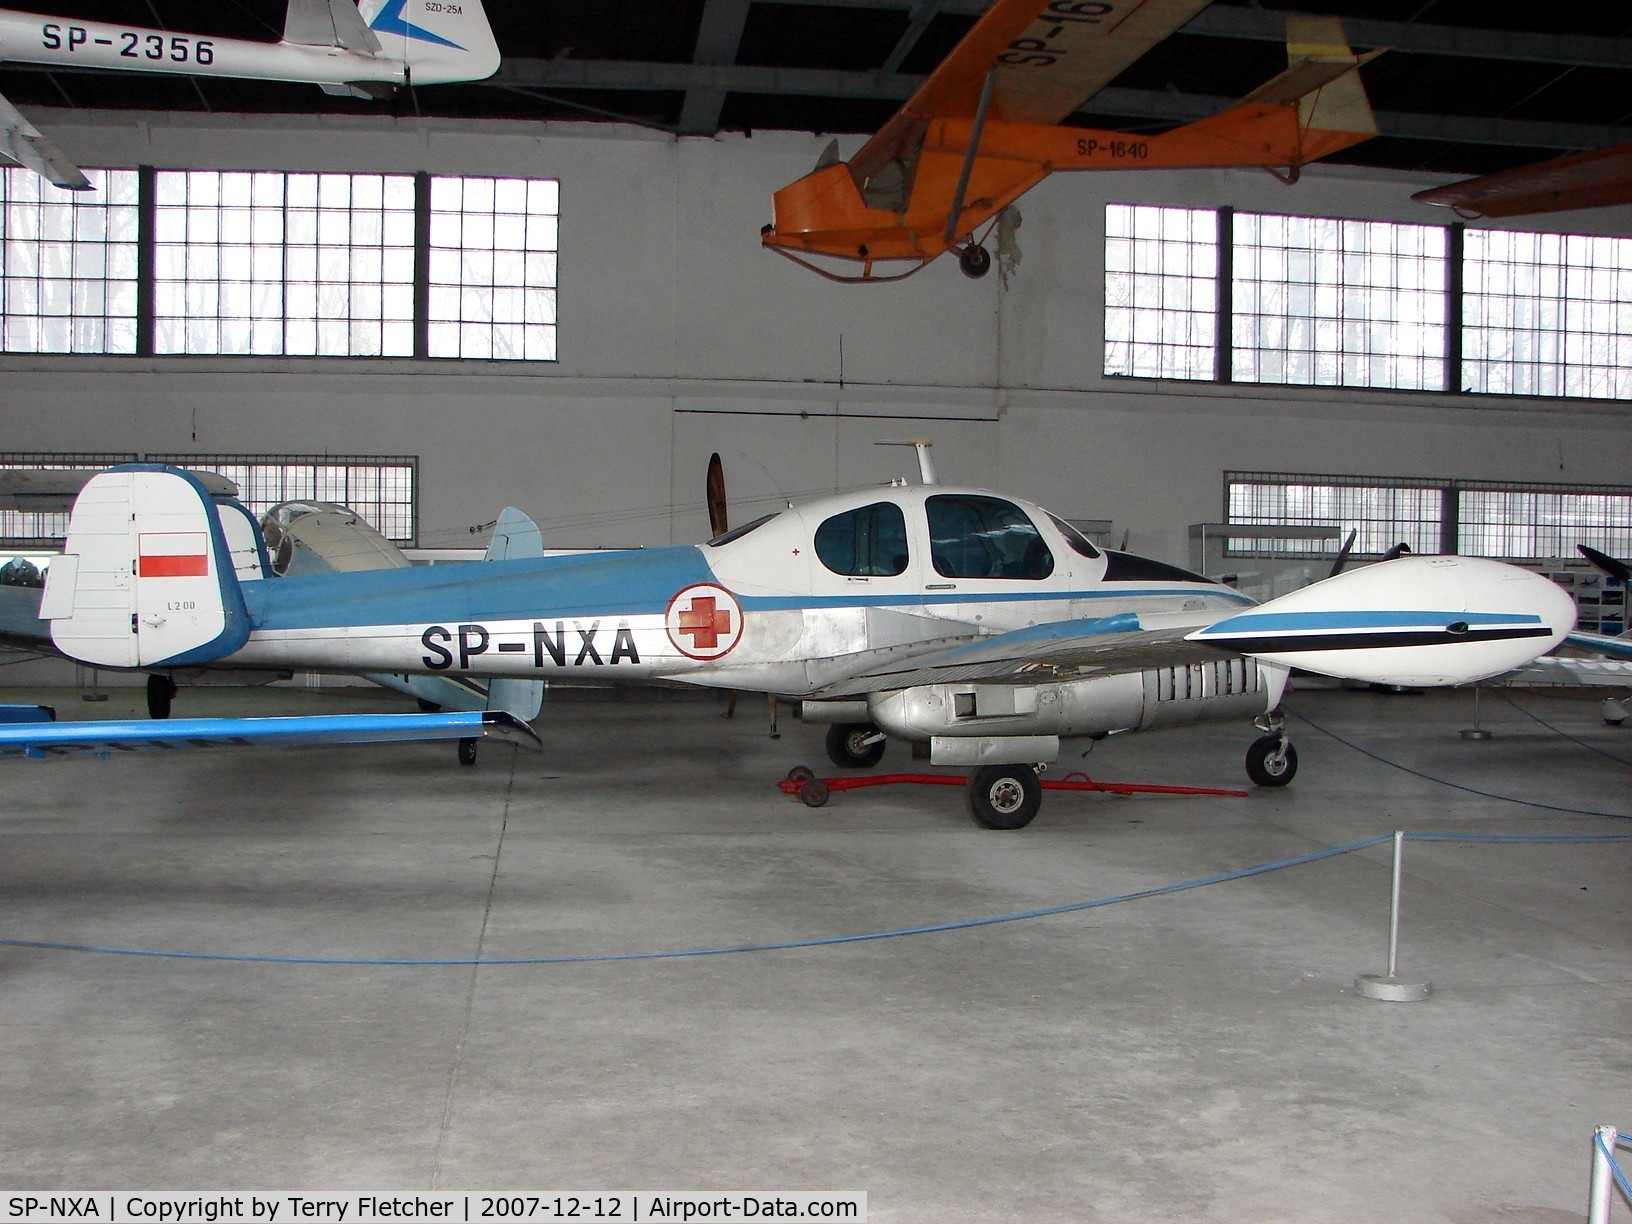 SP-NXA, 1961 Let L-200A Morava C/N 170409, Let L-200D Morava preserved at the Poland Aviation Museum in Krakow